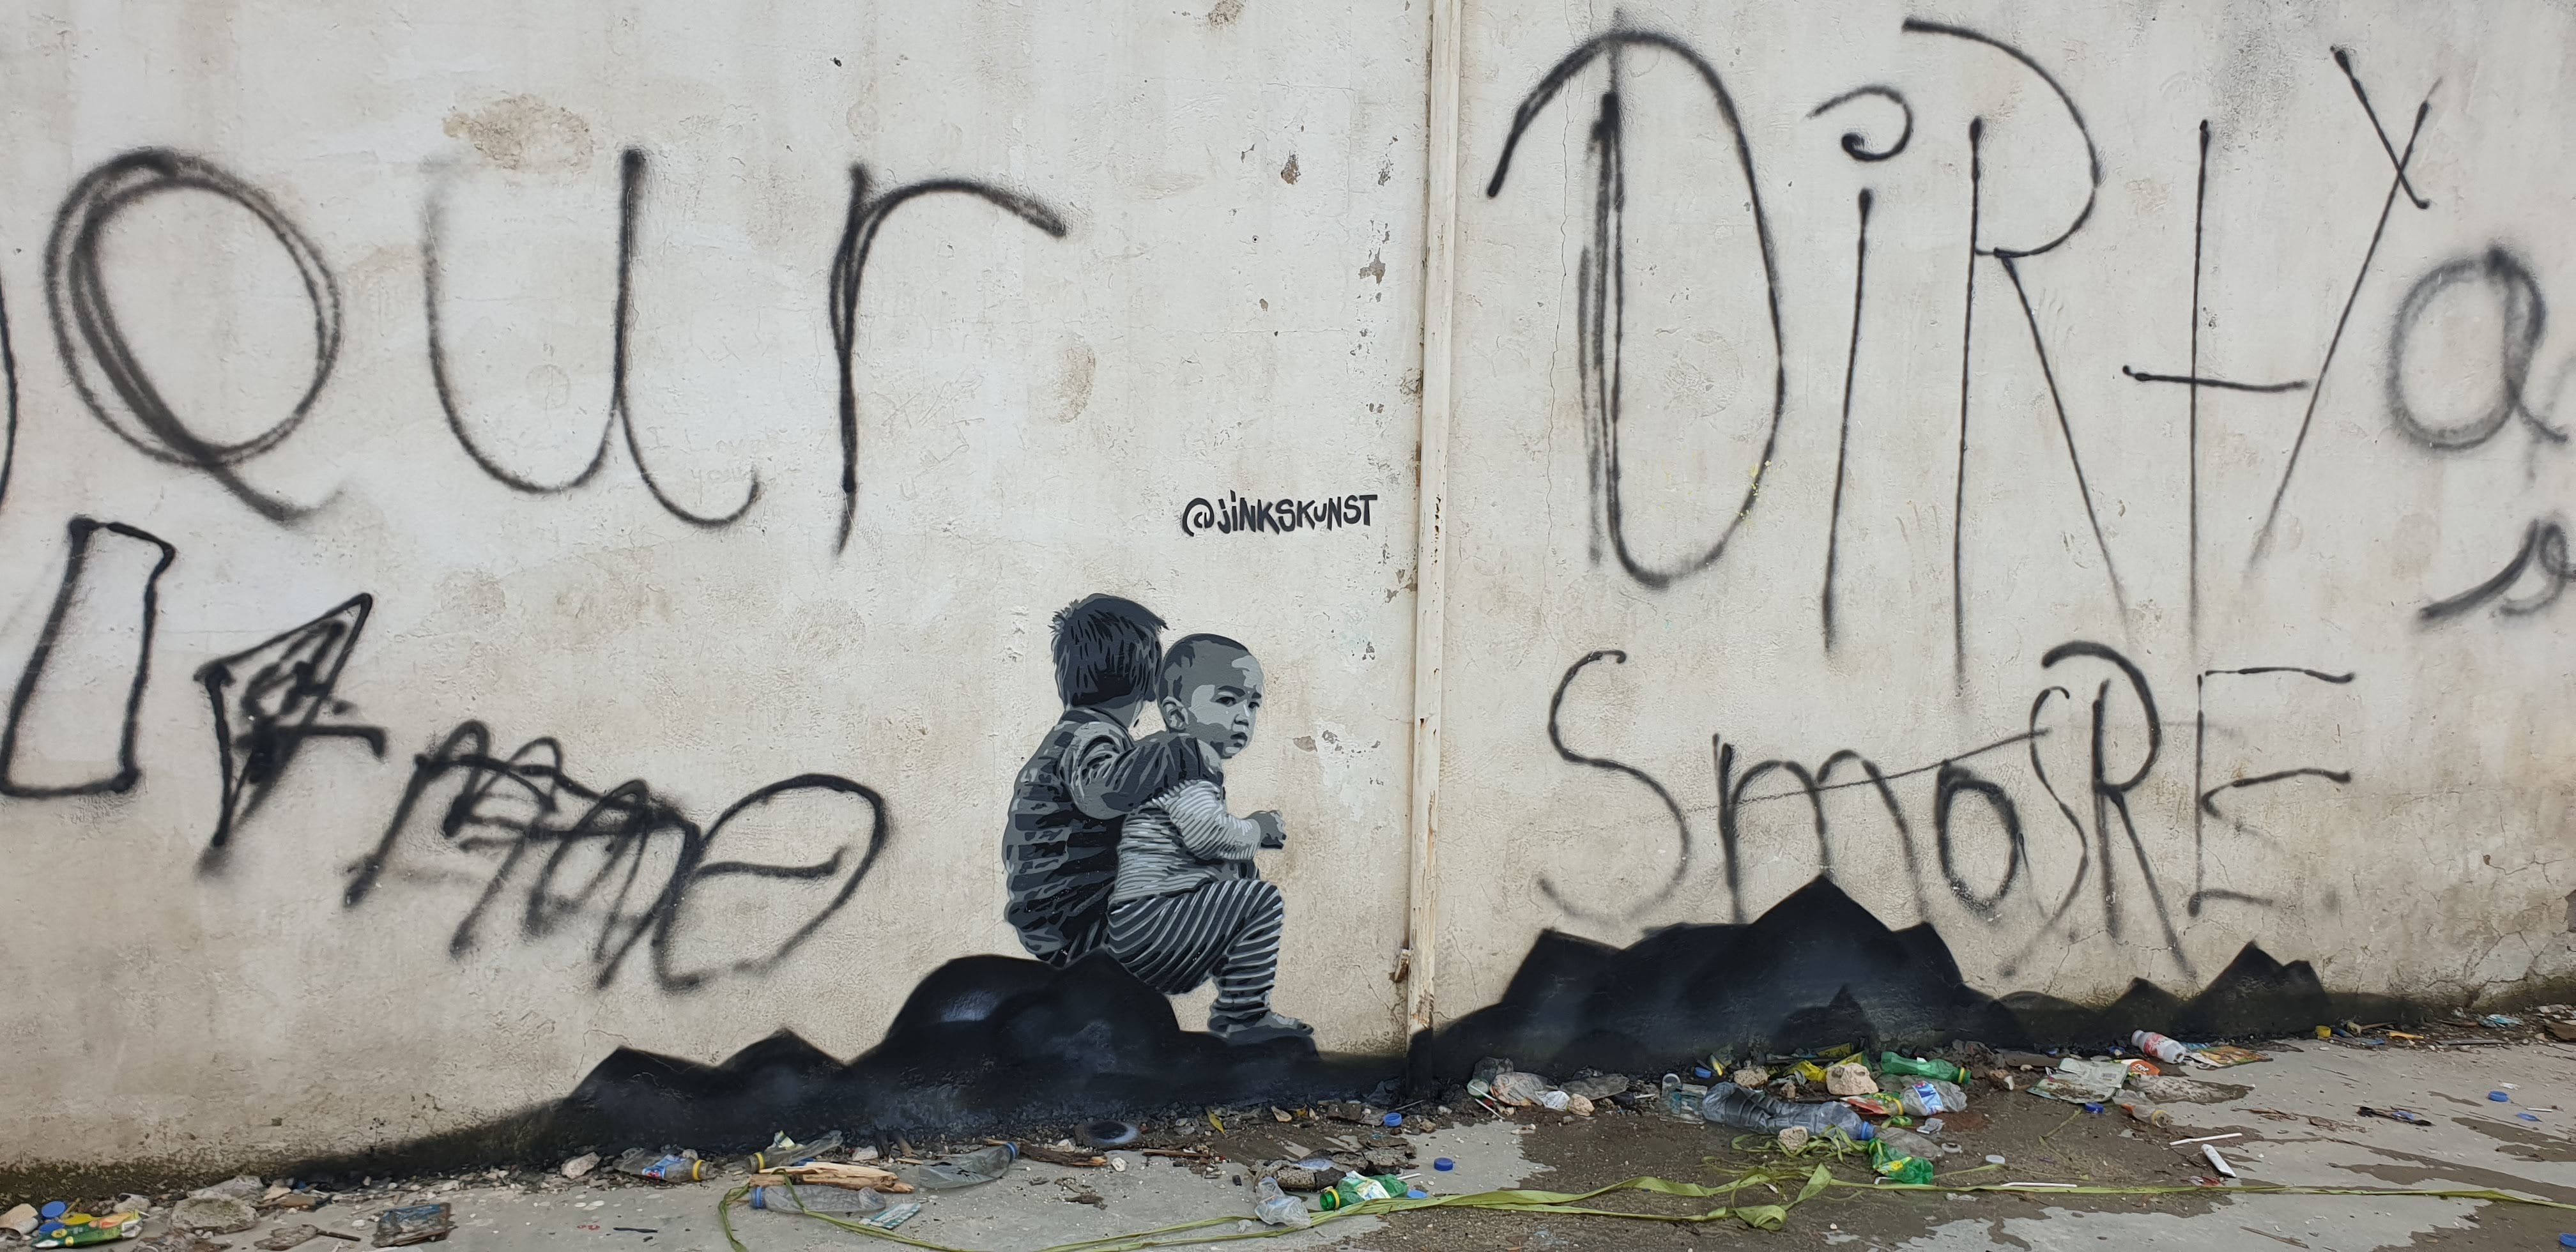 Graffiti 4657 Enfants Syriens by the artist Jinks Kunst captured by Jinks Kunst in Njar Lebanon